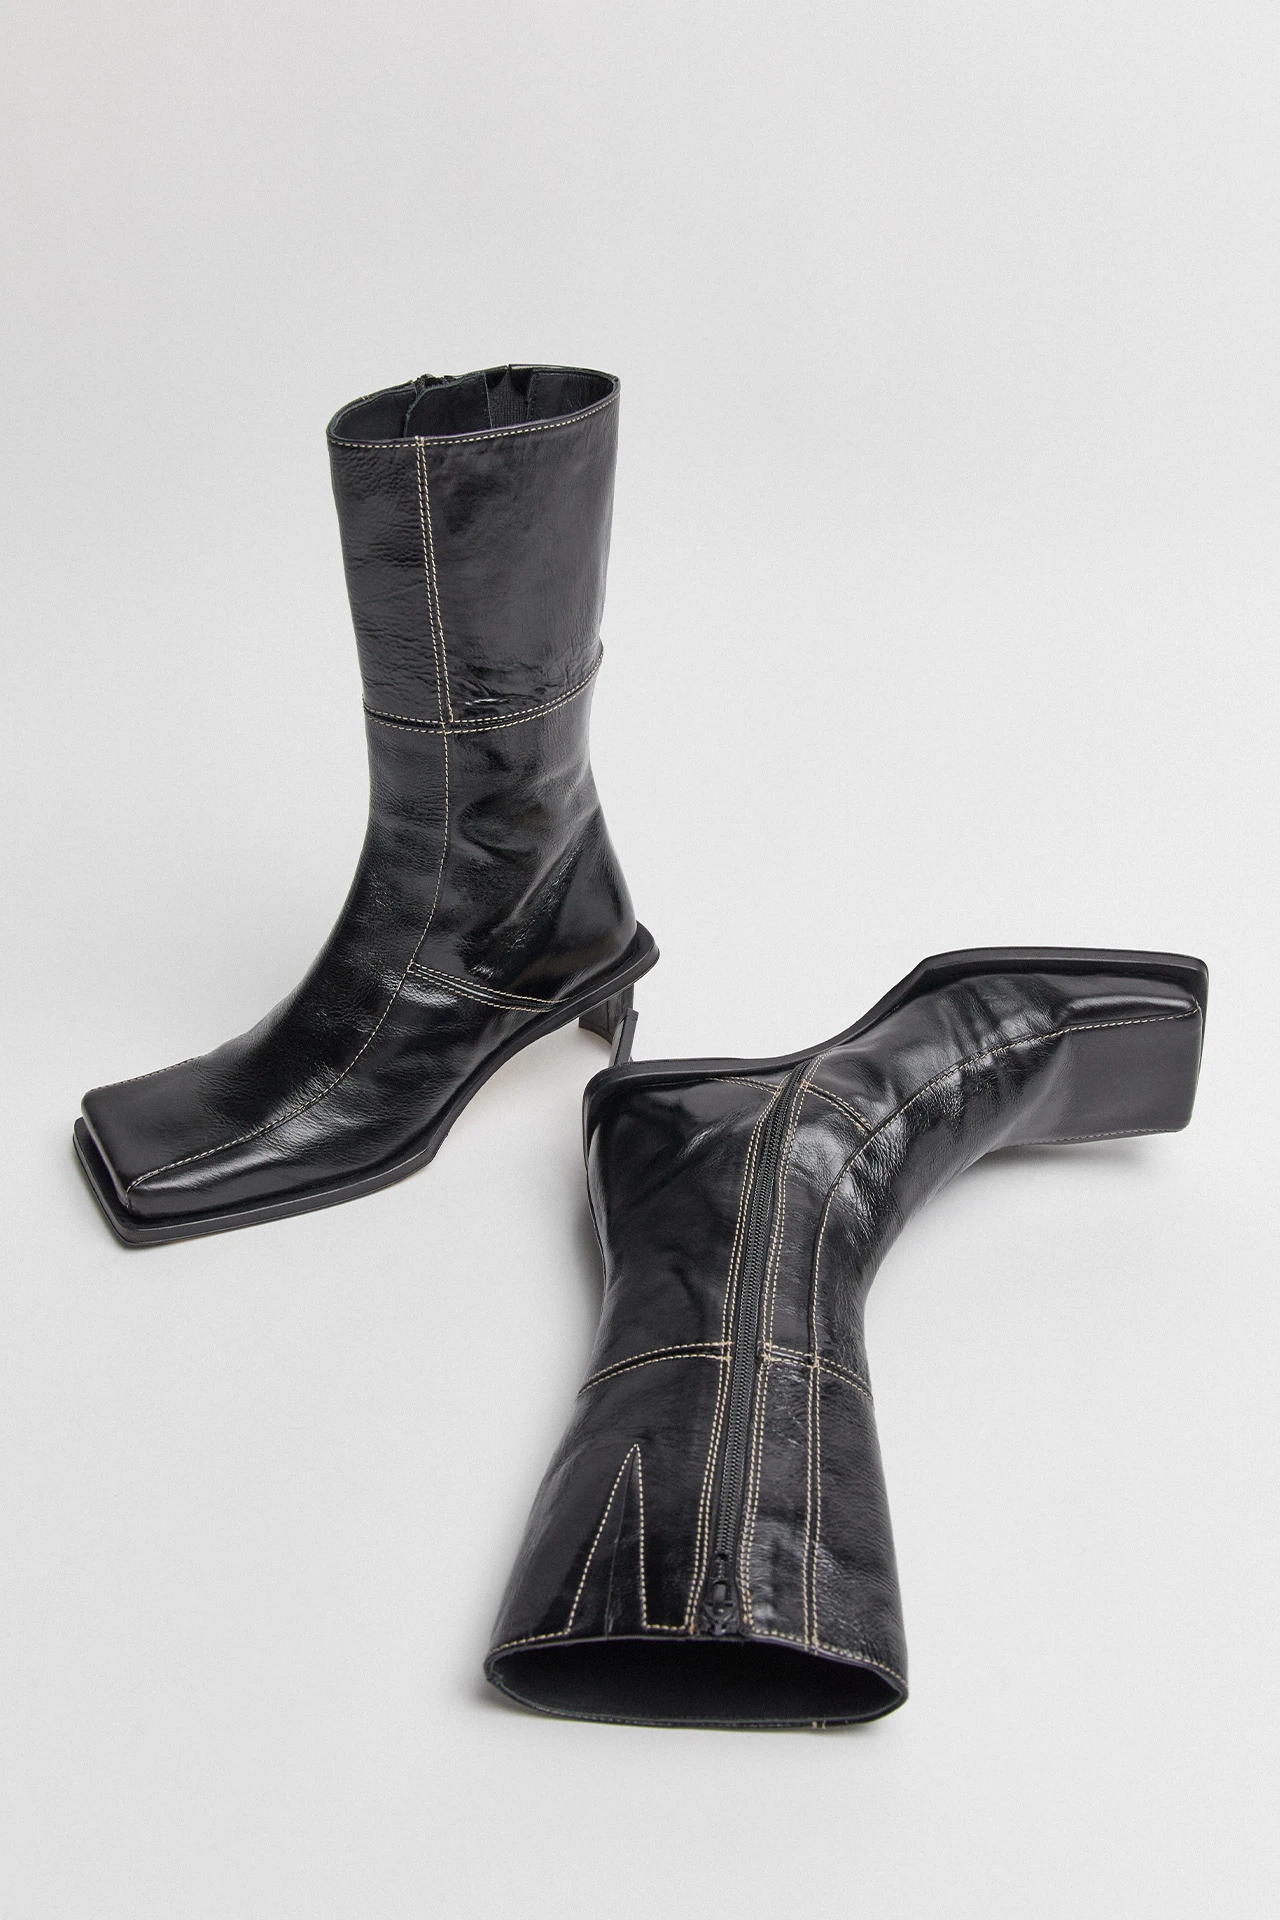 miista-amparo-black-boots-2